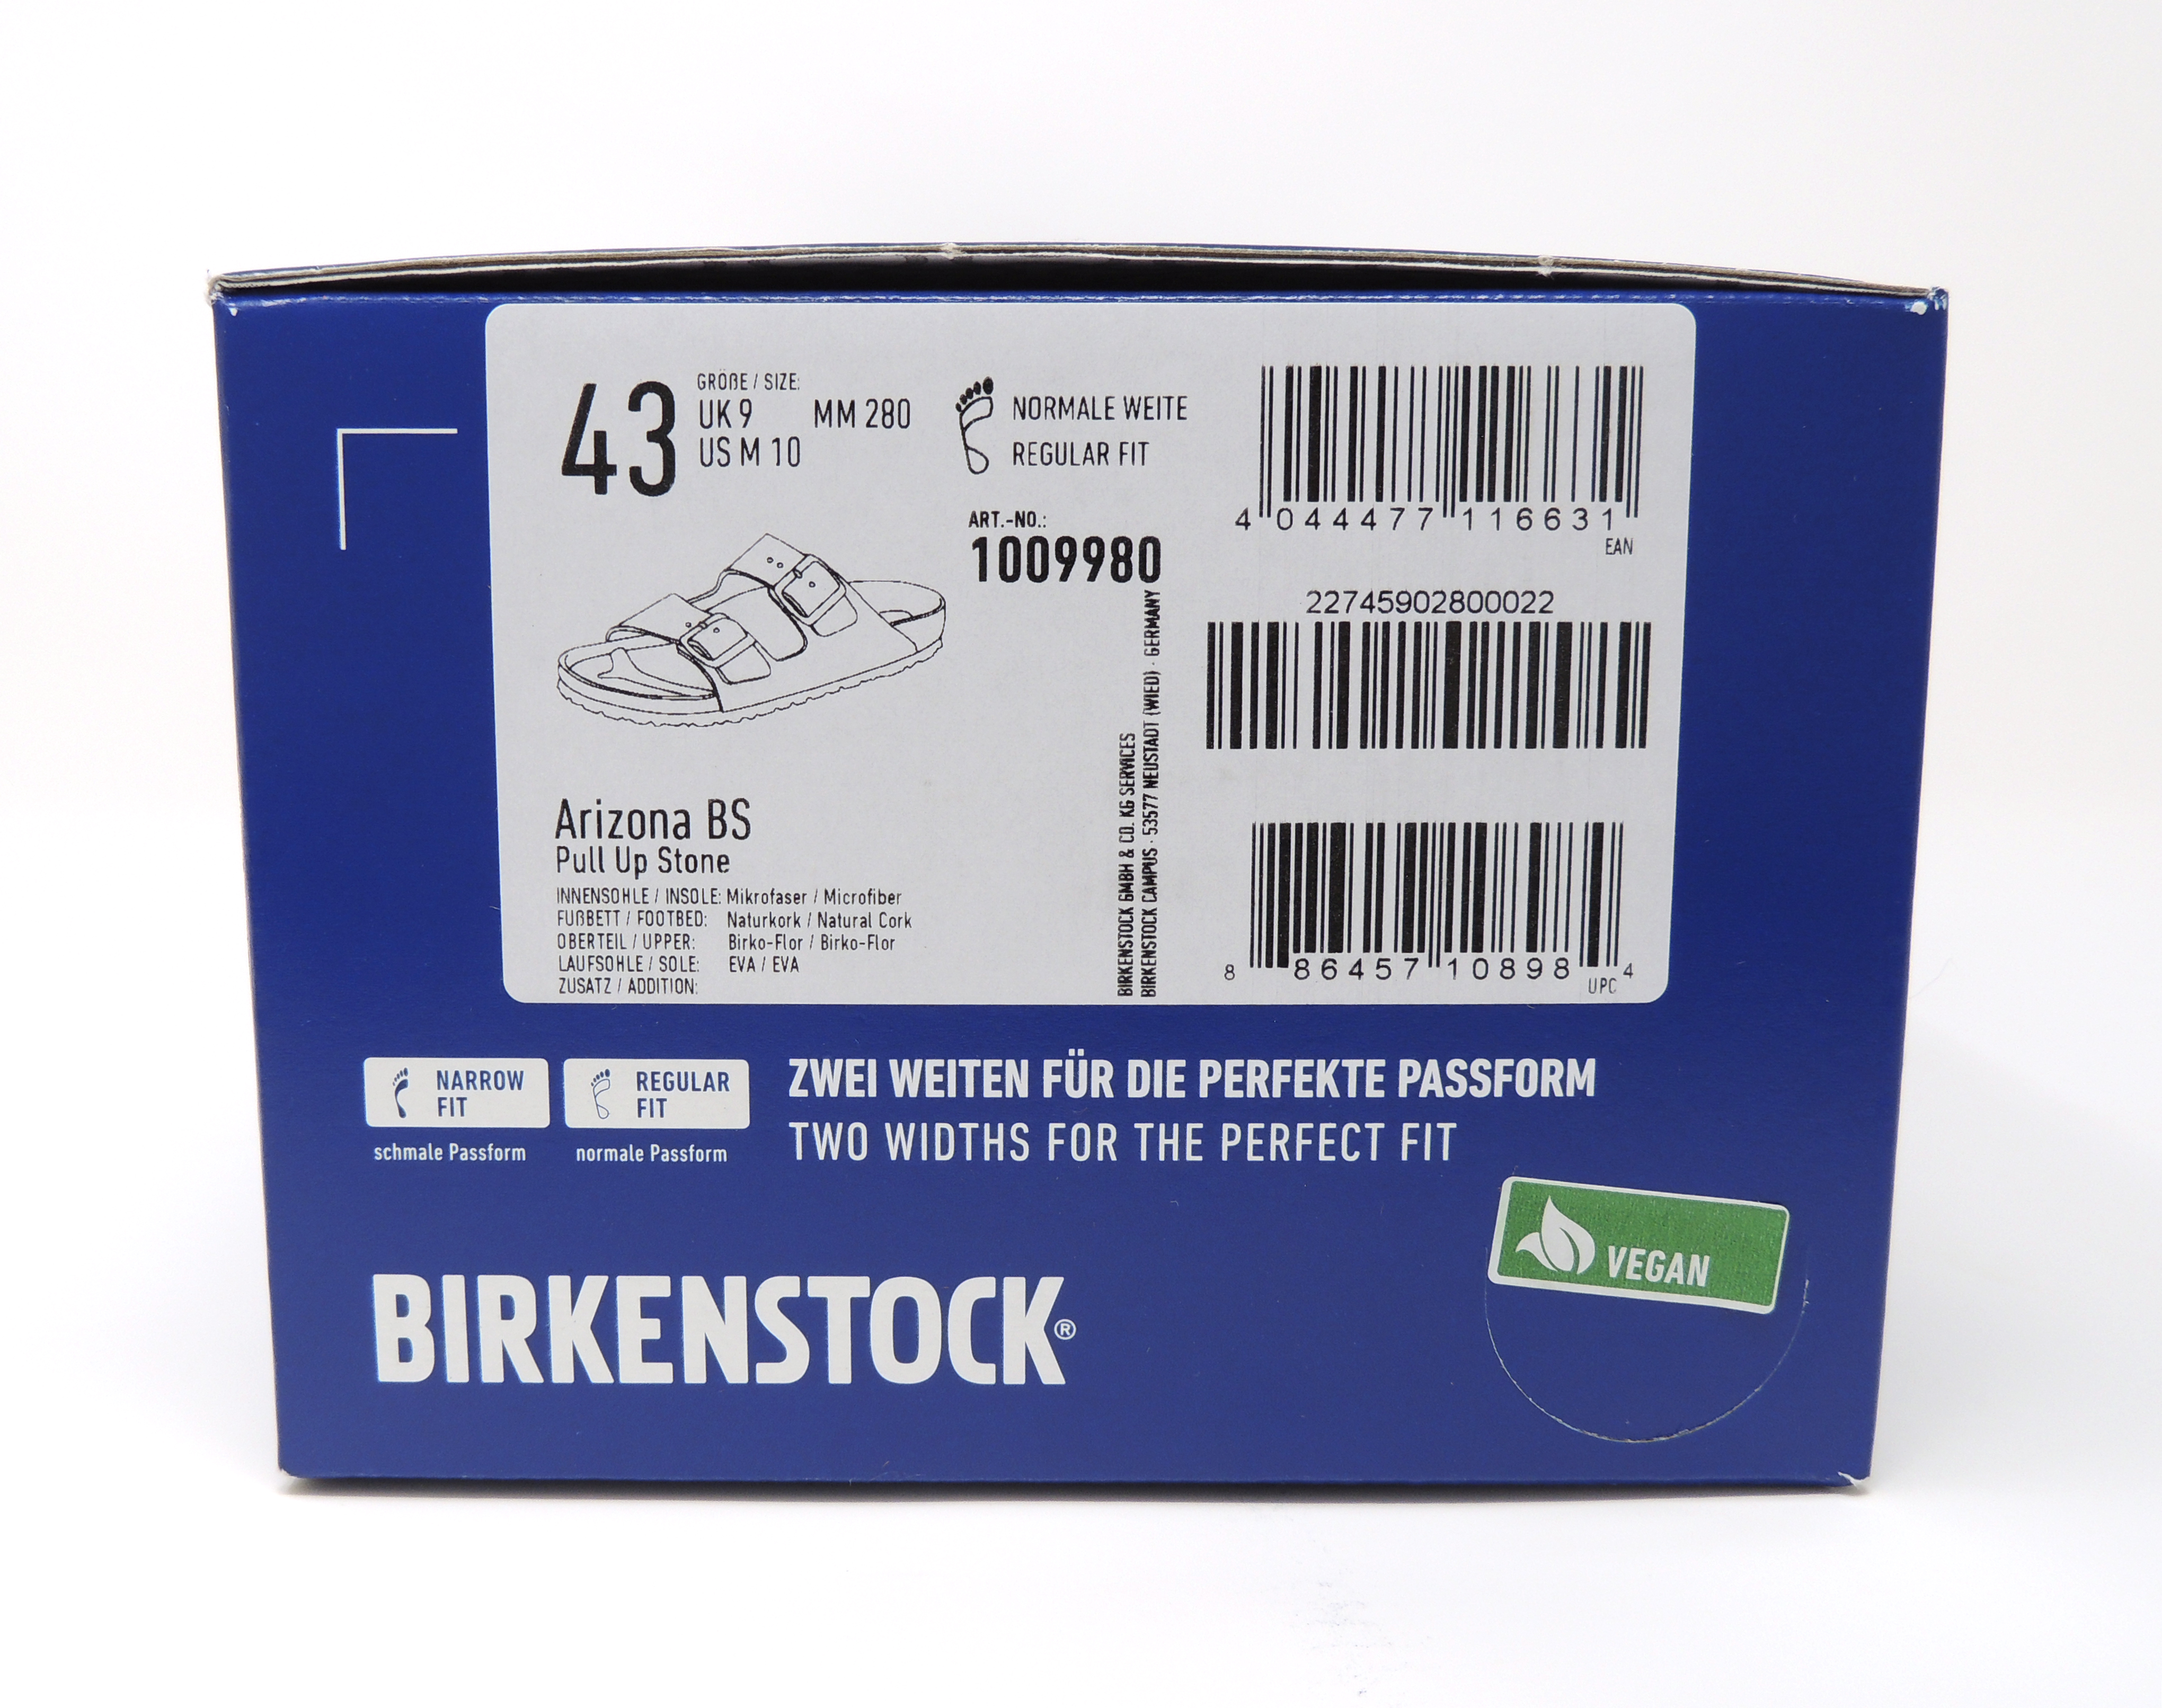 birkenstocks box